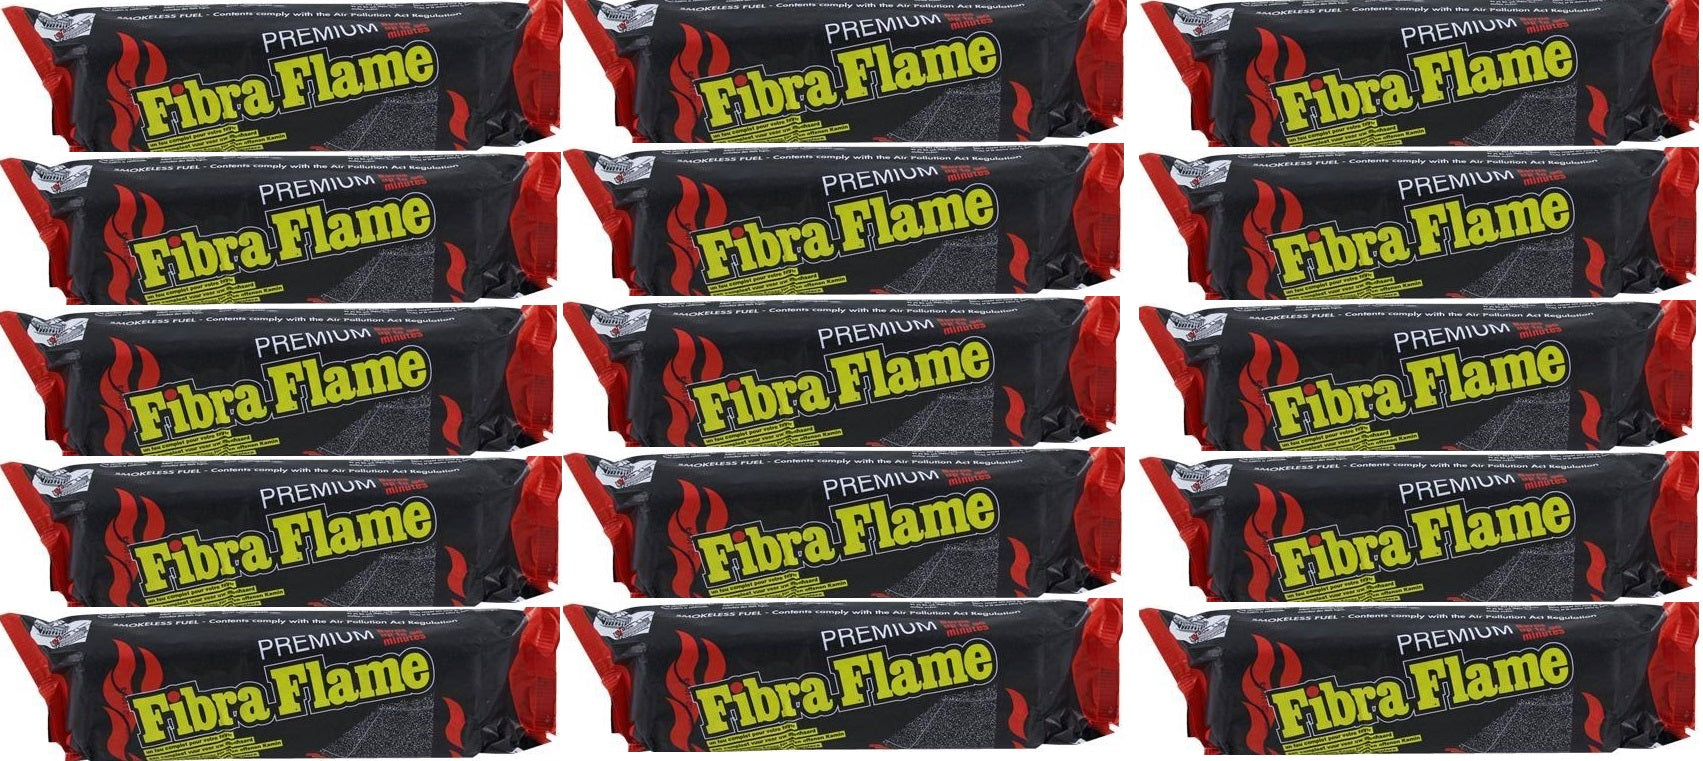 15 x Fibra Flame Premium Fire log 700G